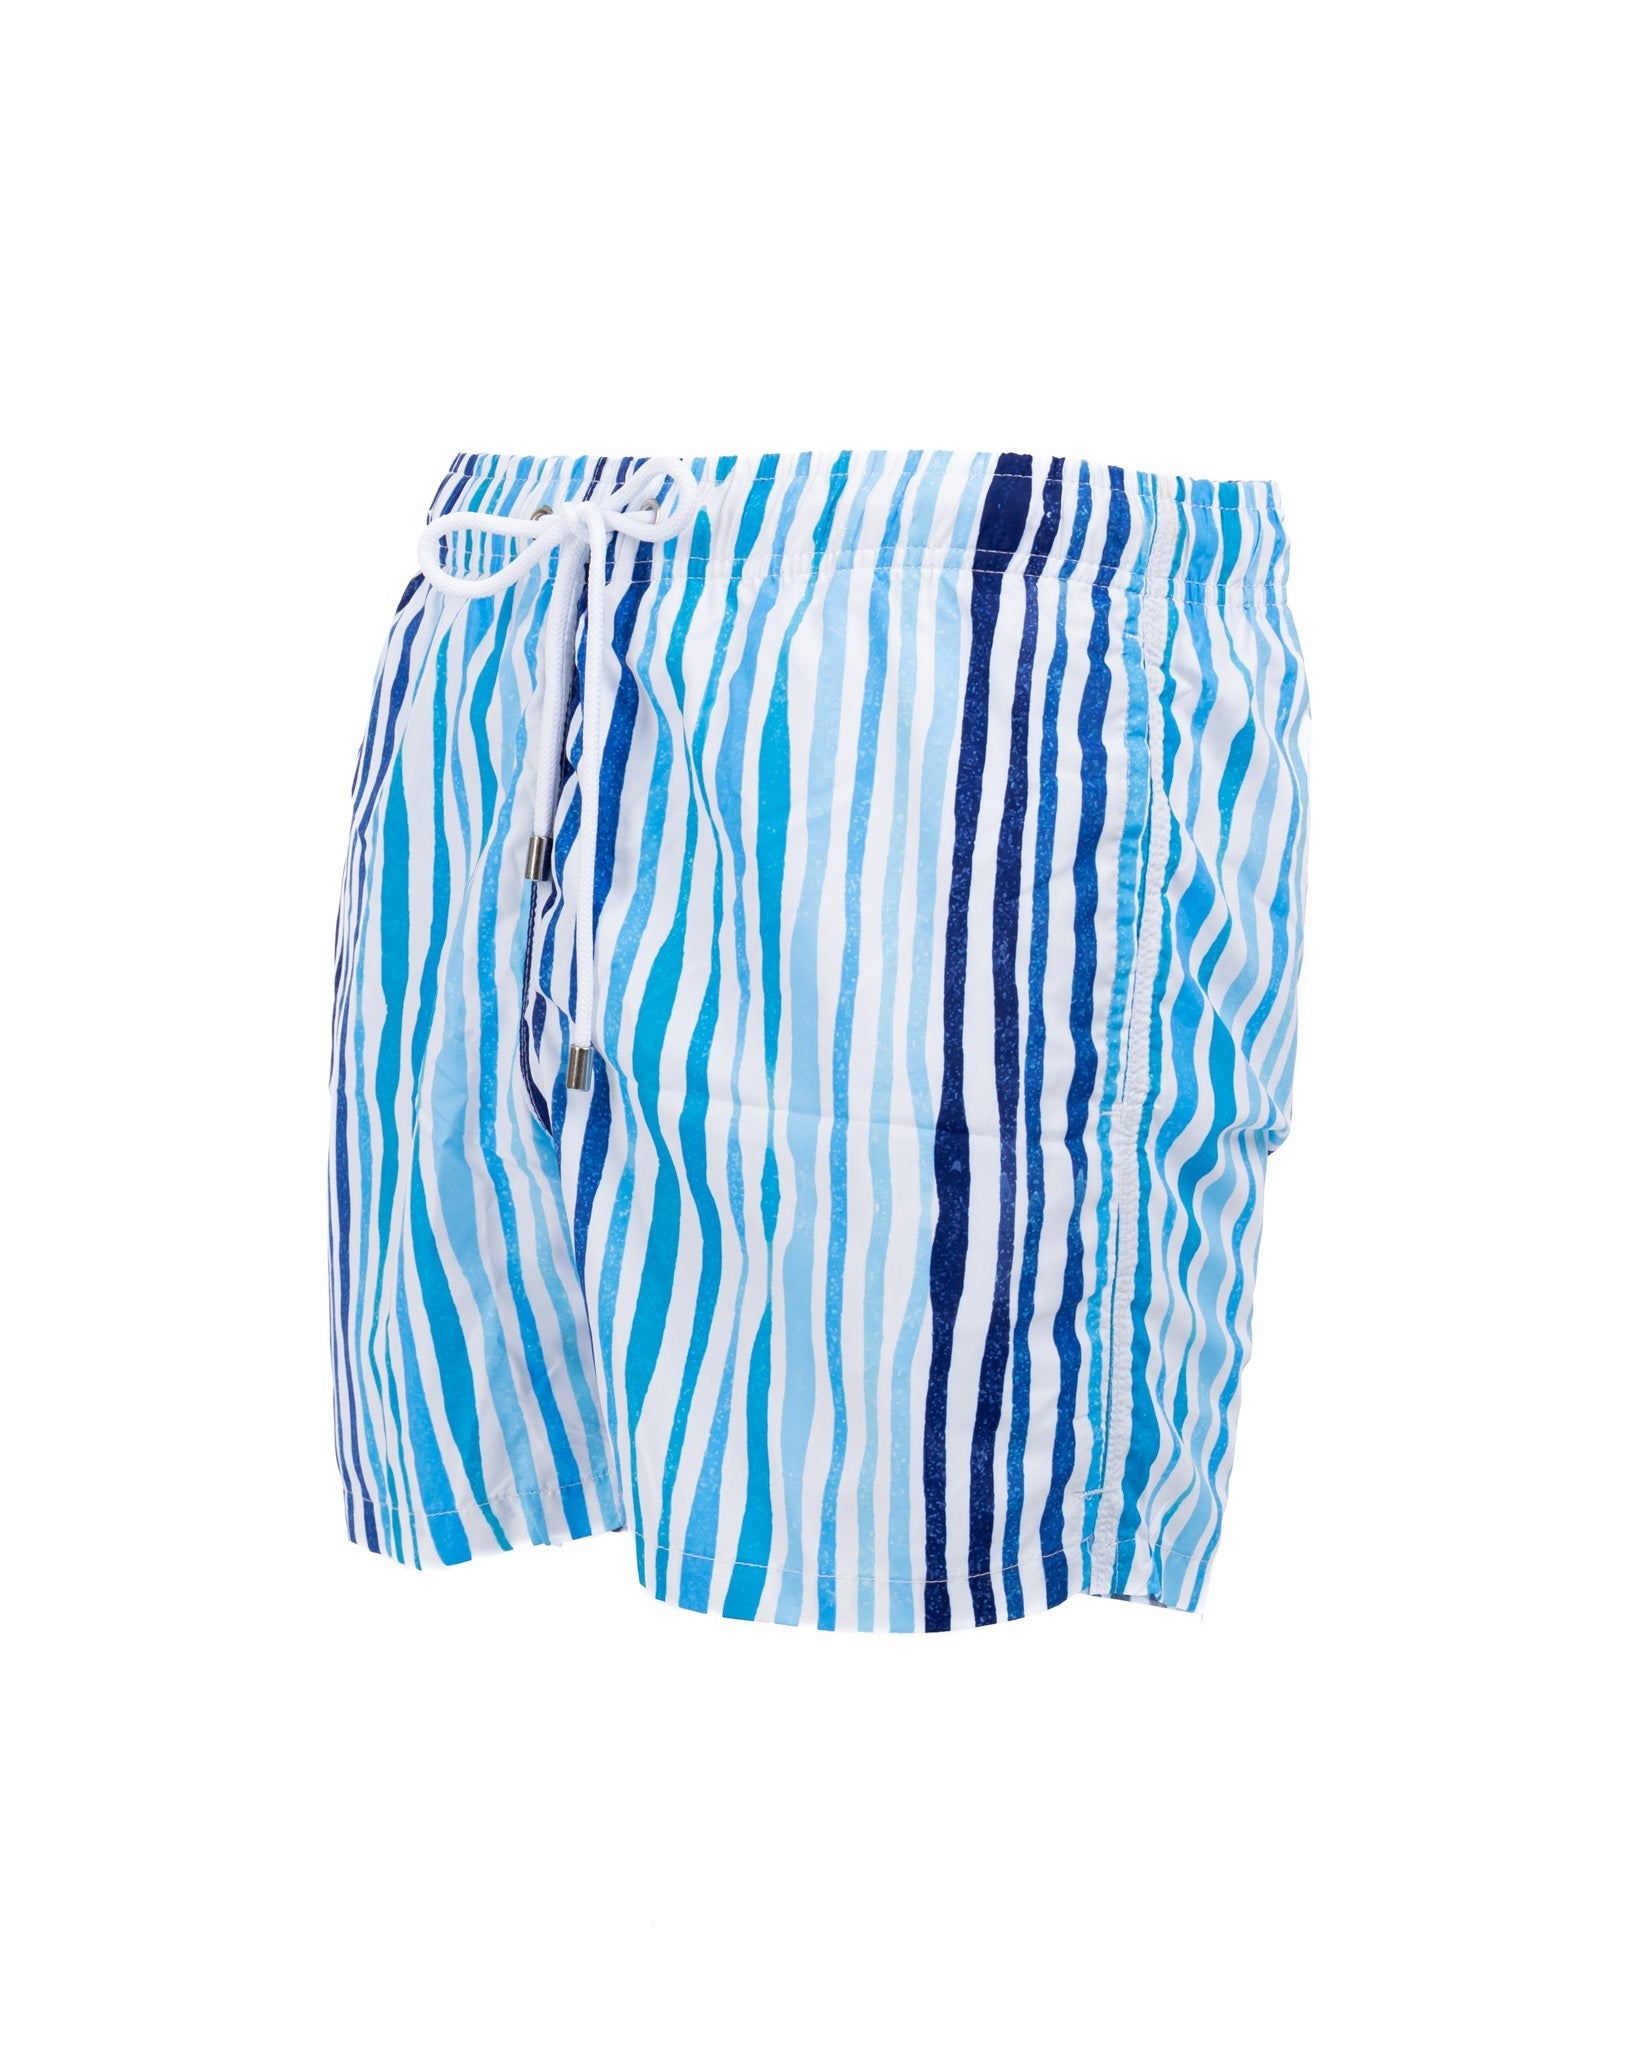 Stripe - maillot de bain bleu clair à motifs